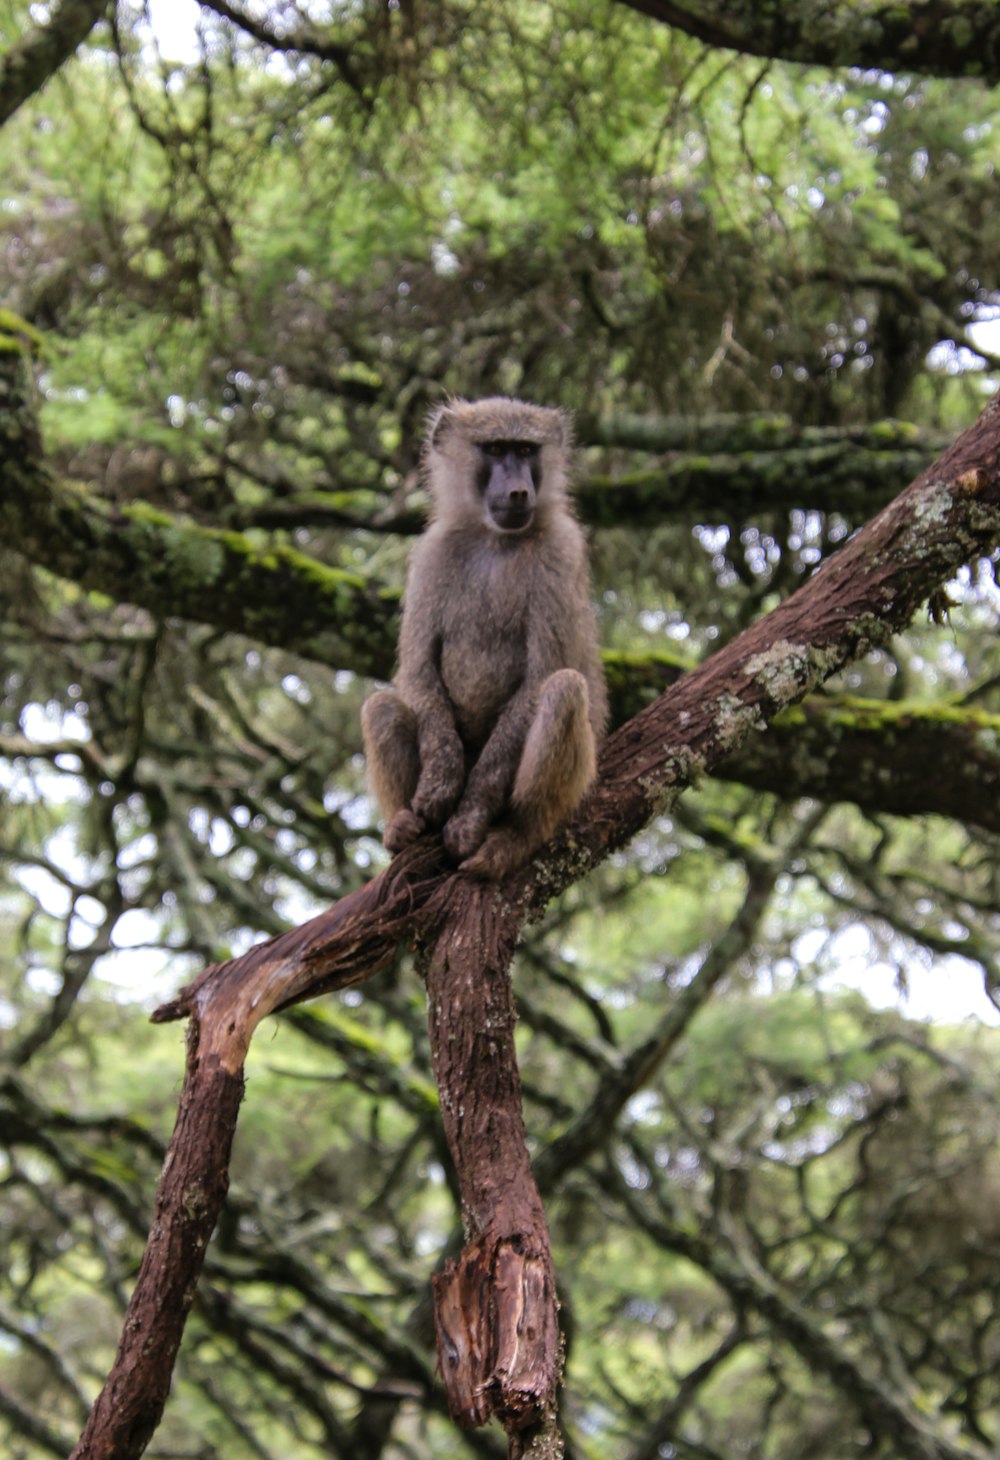 monkey on tree branch during daytime